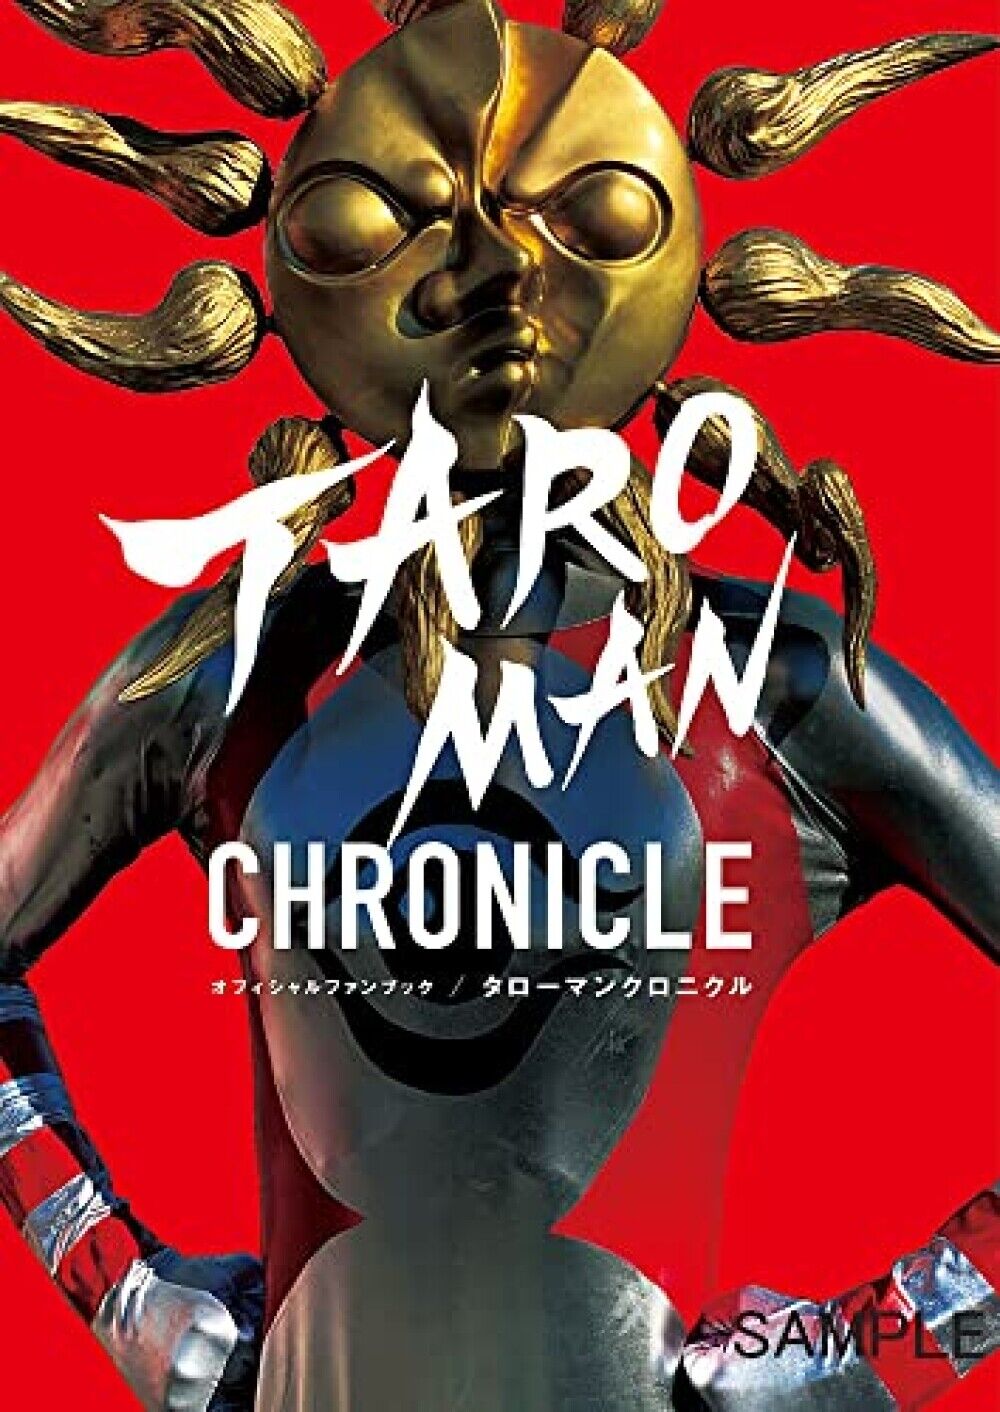 Taroman Chronicle Taro Okamoto Tokusatsu Hero Official Fan Collection Book